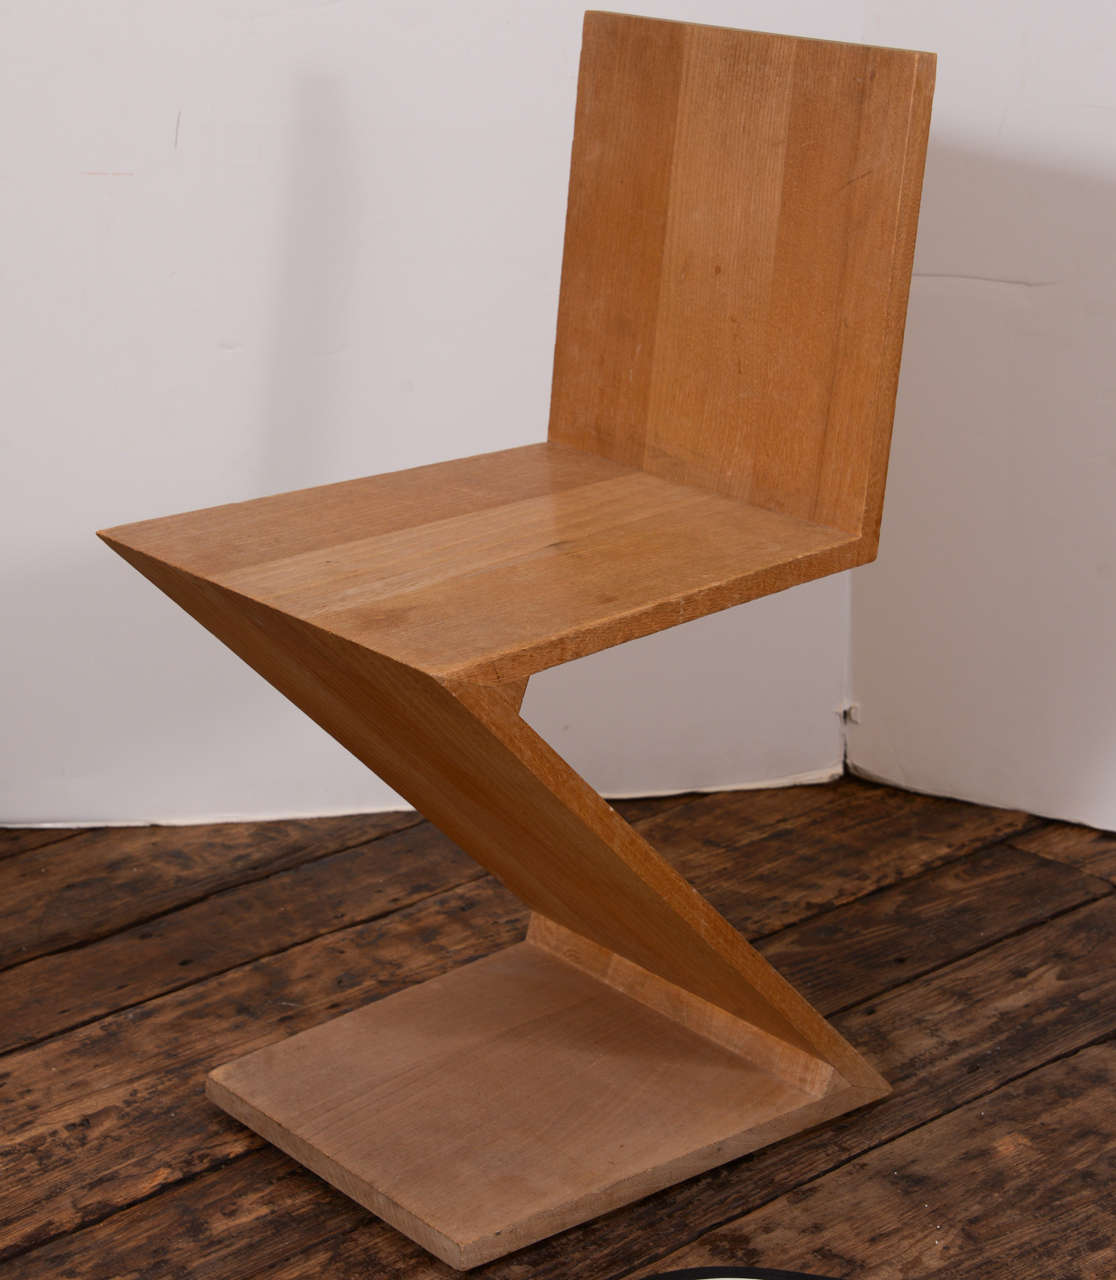 Zig Zag Chair by Gerrit Thomas Rietveld at 1stdibs